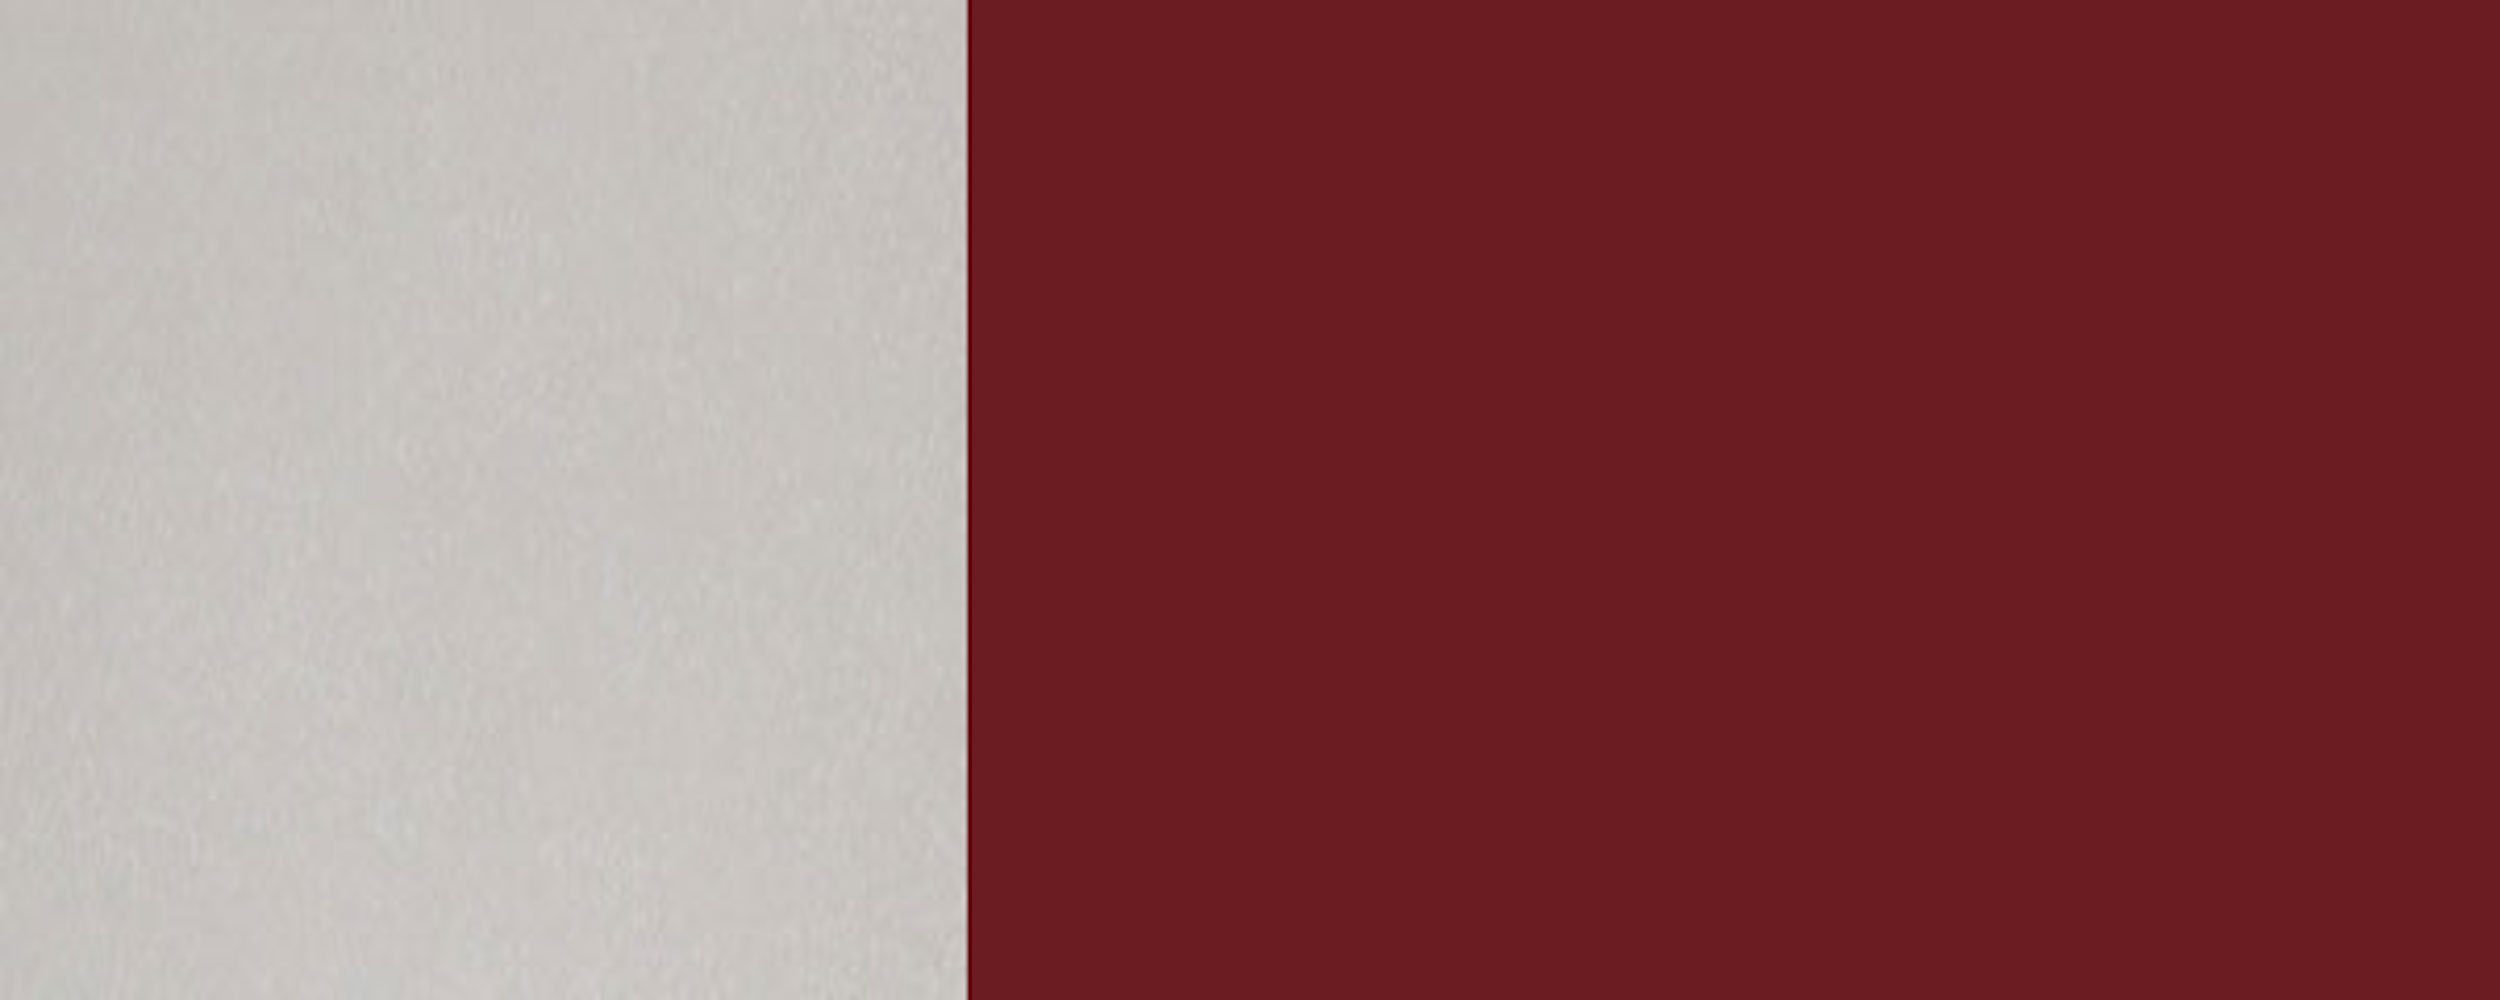 Feldmann-Wohnen Klapphängeschrank Rimini matt 50cm 3004 Korpusfarbe mit 1-türig wählbar purpurrot Front- (Rimini) Glaseinsatz RAL und